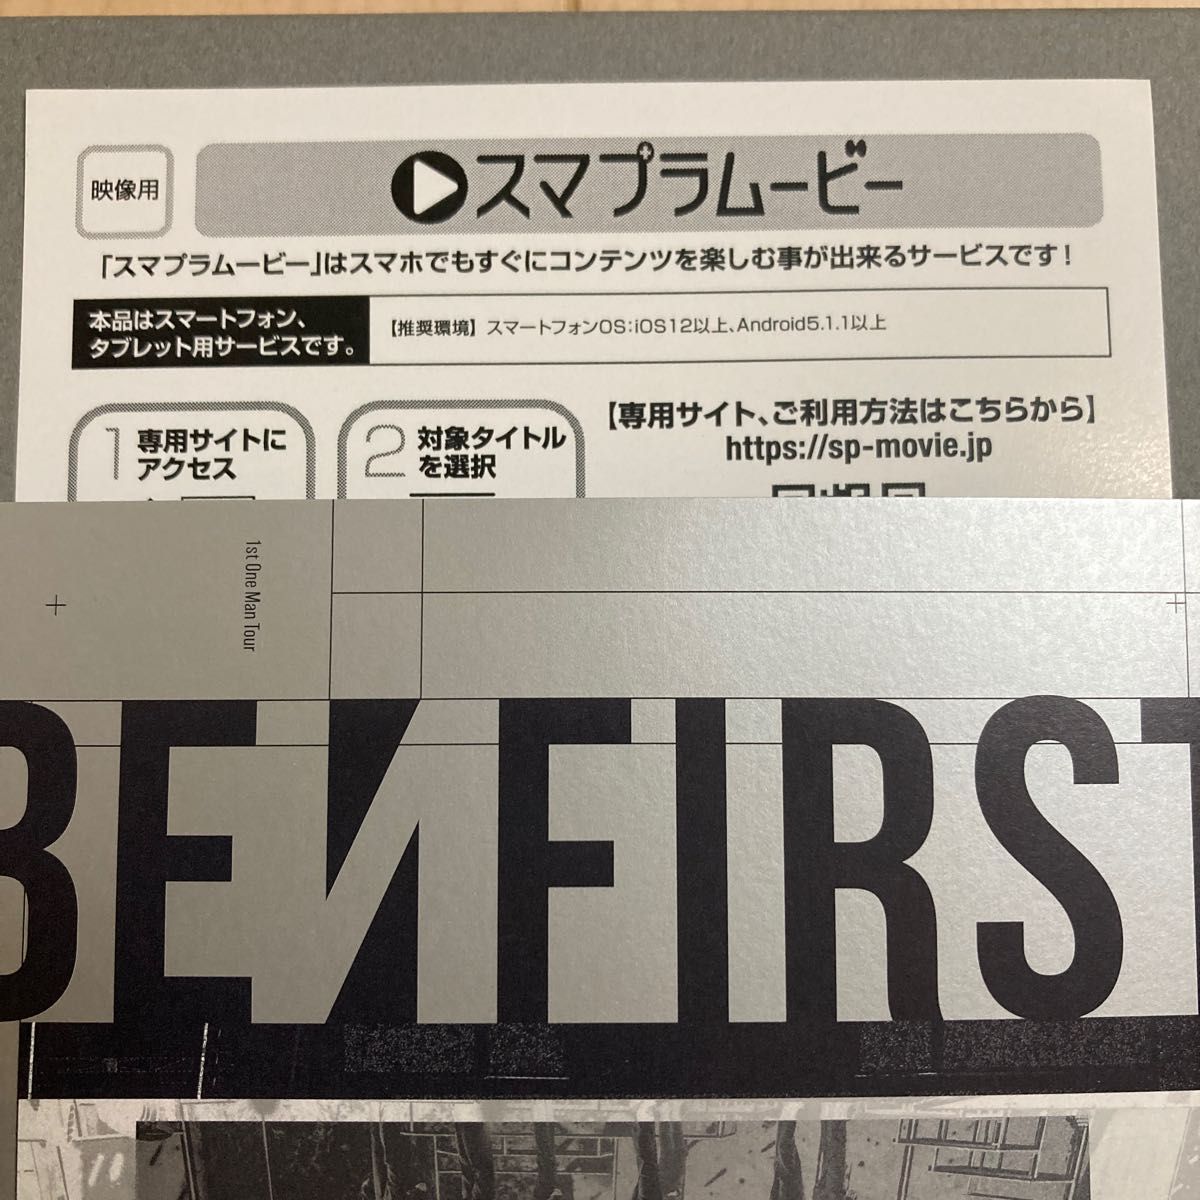 BE:FIRST 1st One Man Tour BMSG限定盤 DVD-